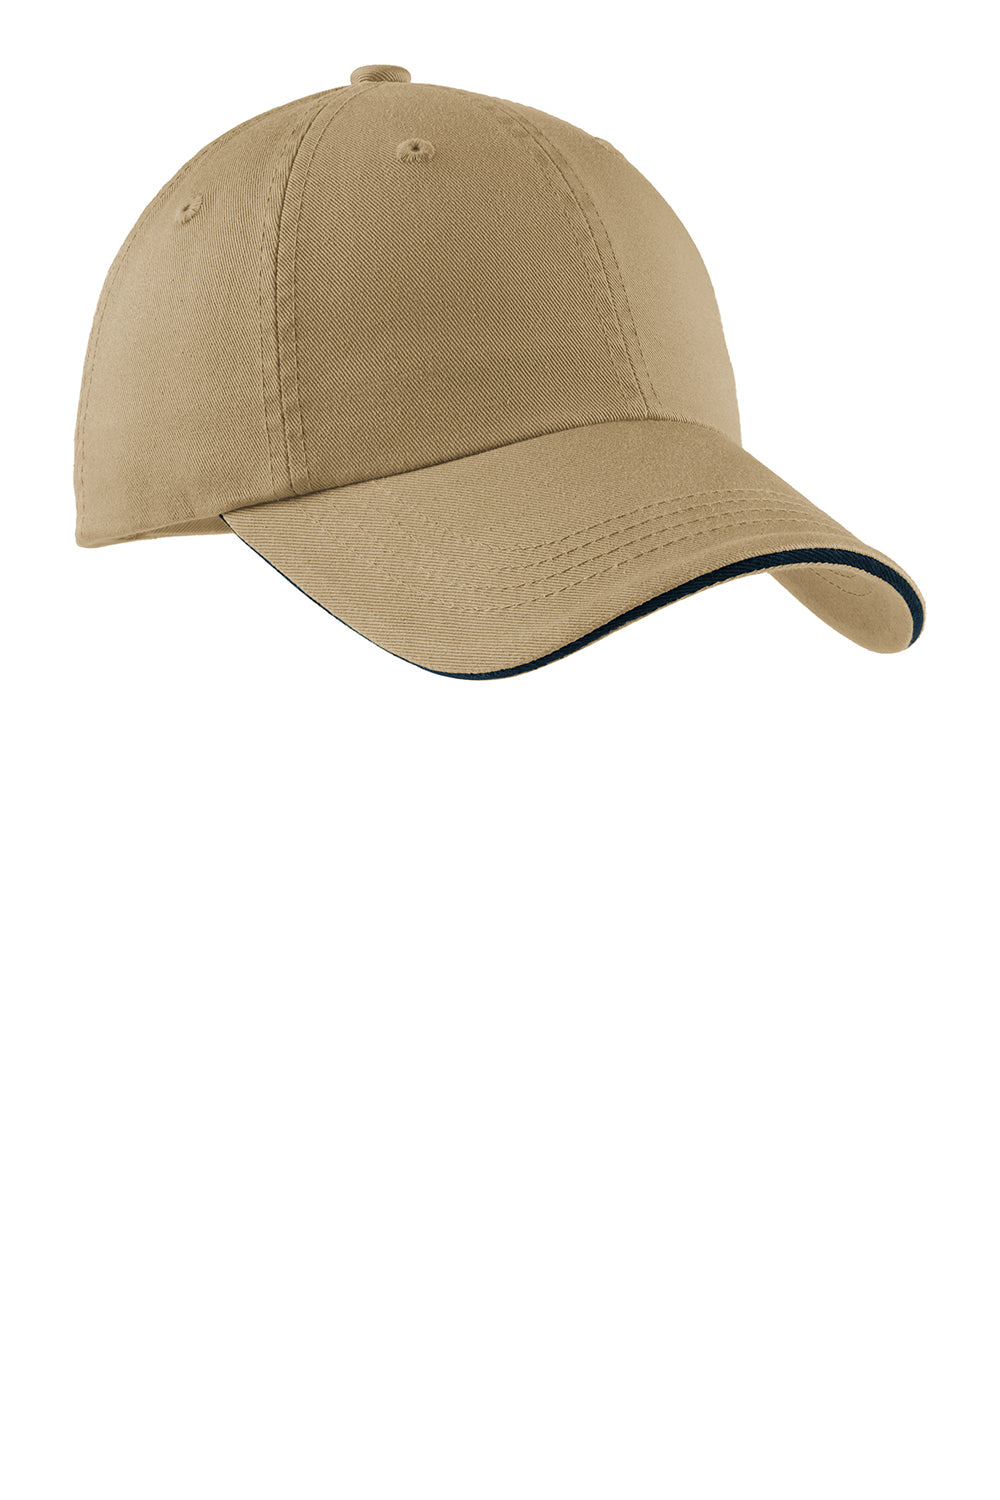 Port Authority C830 Mens Adjustable Hat Khaki Brown/Charcoal Grey Front